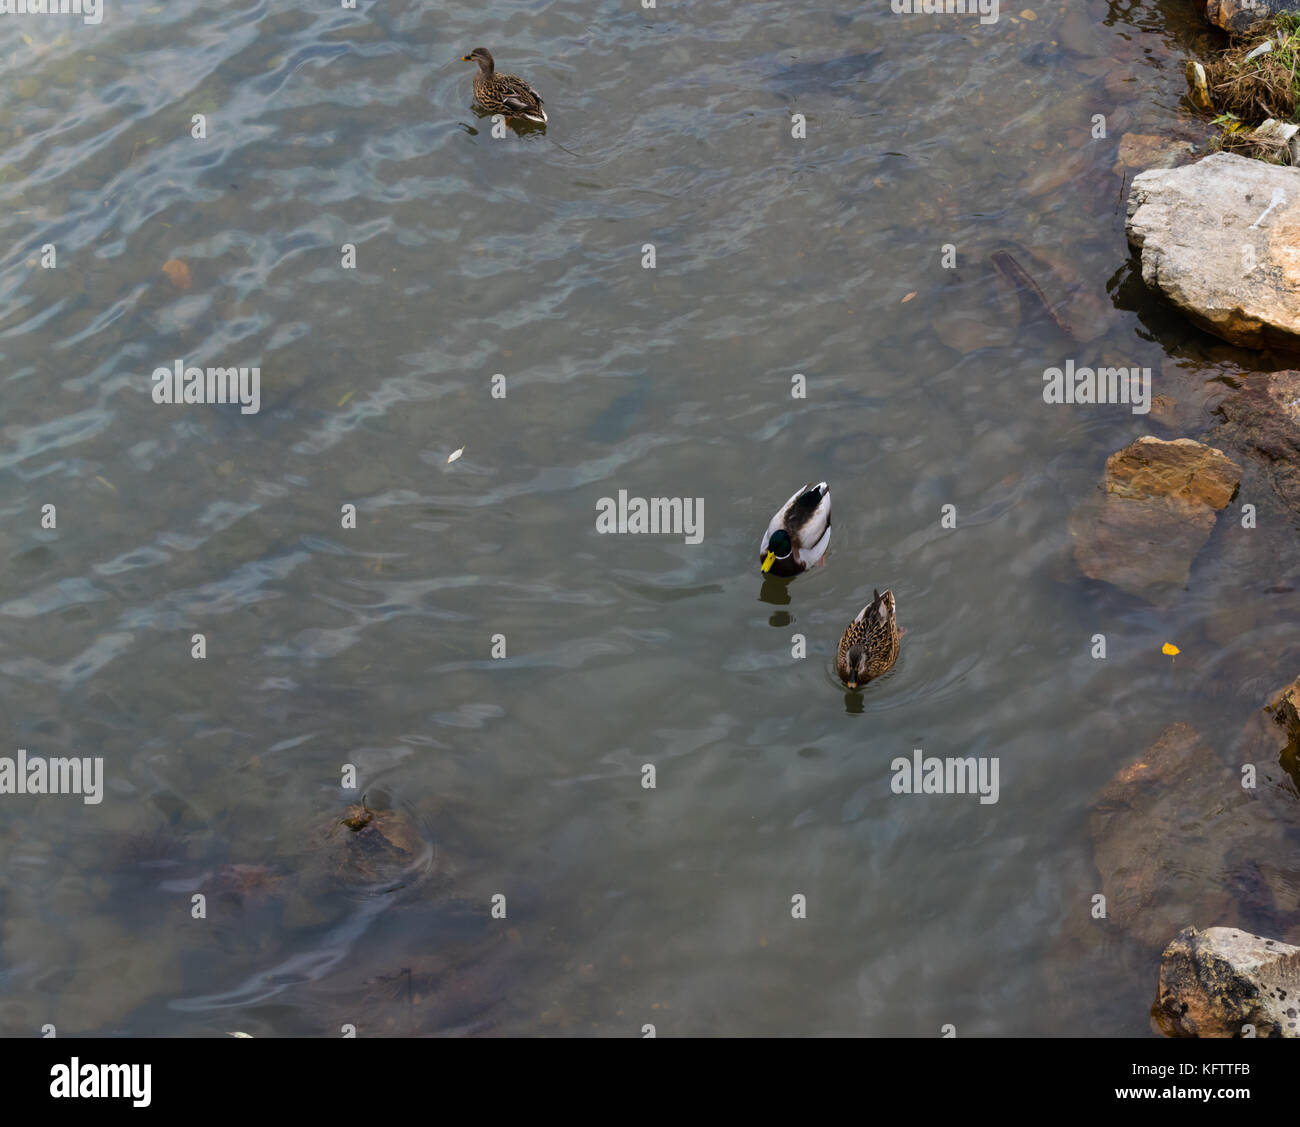 Wild ducks bathing in a river, Anas platyrhynchos Stock Photo